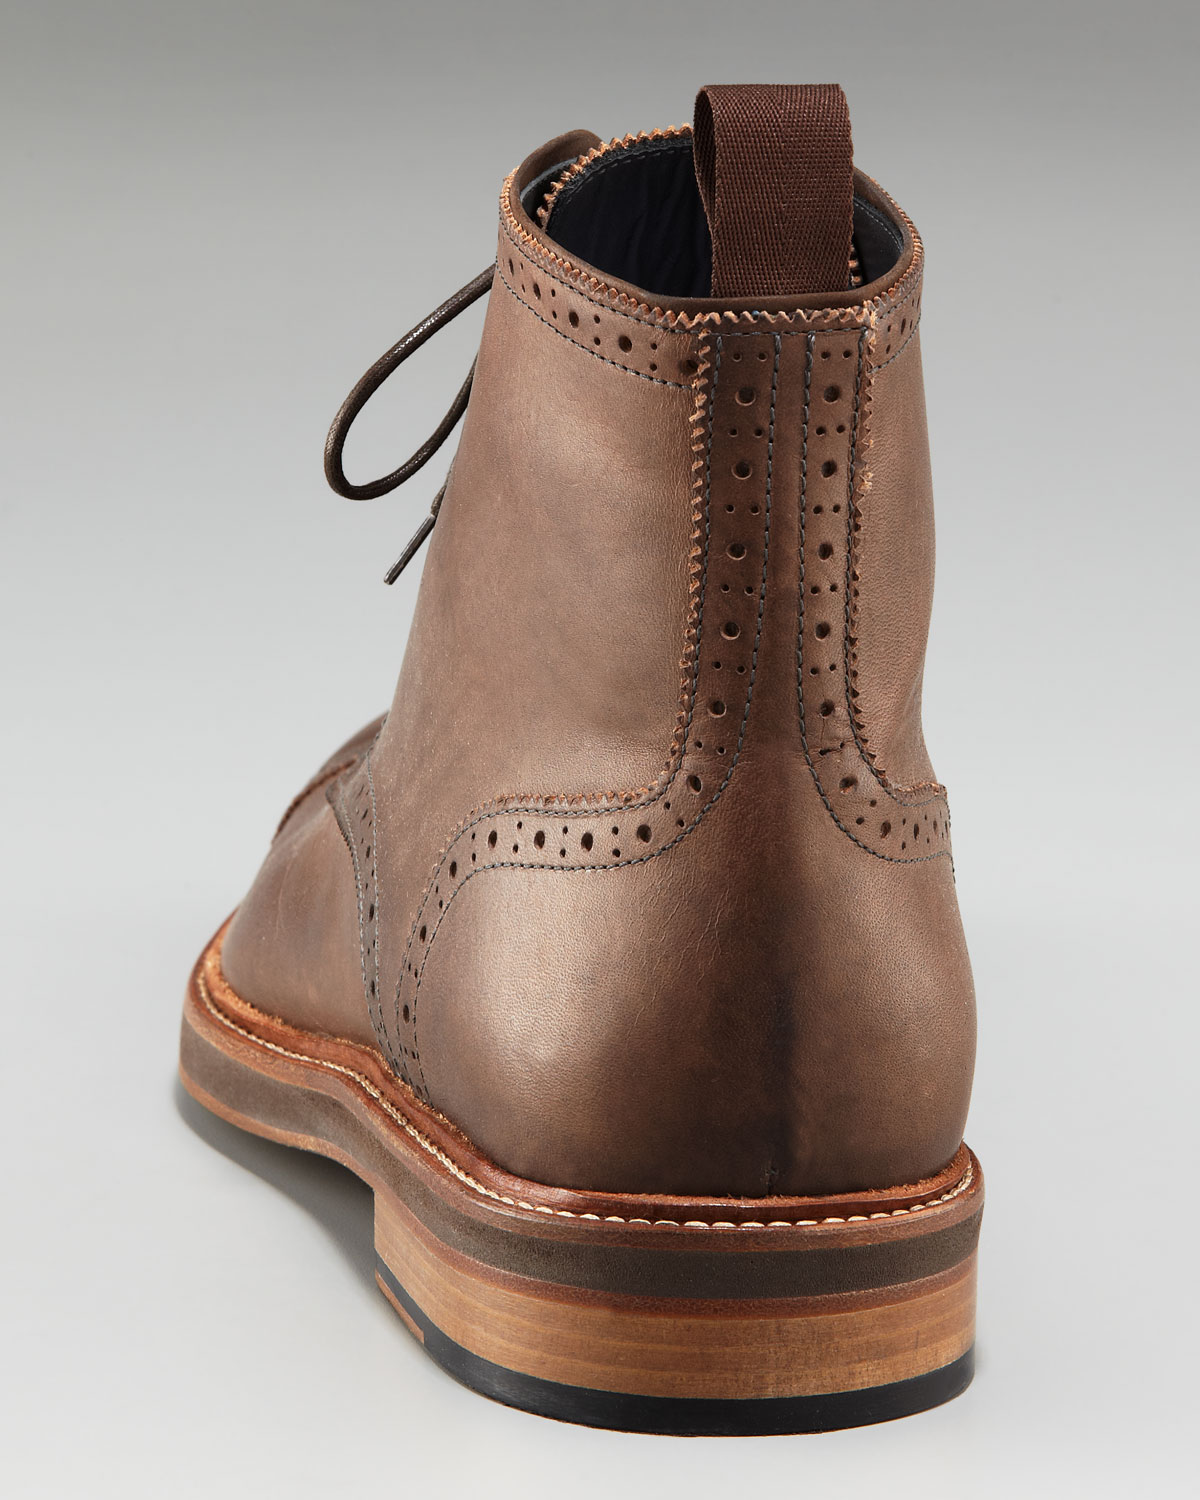 Lyst - Lanvin Cap-toe Boot in Brown for Men